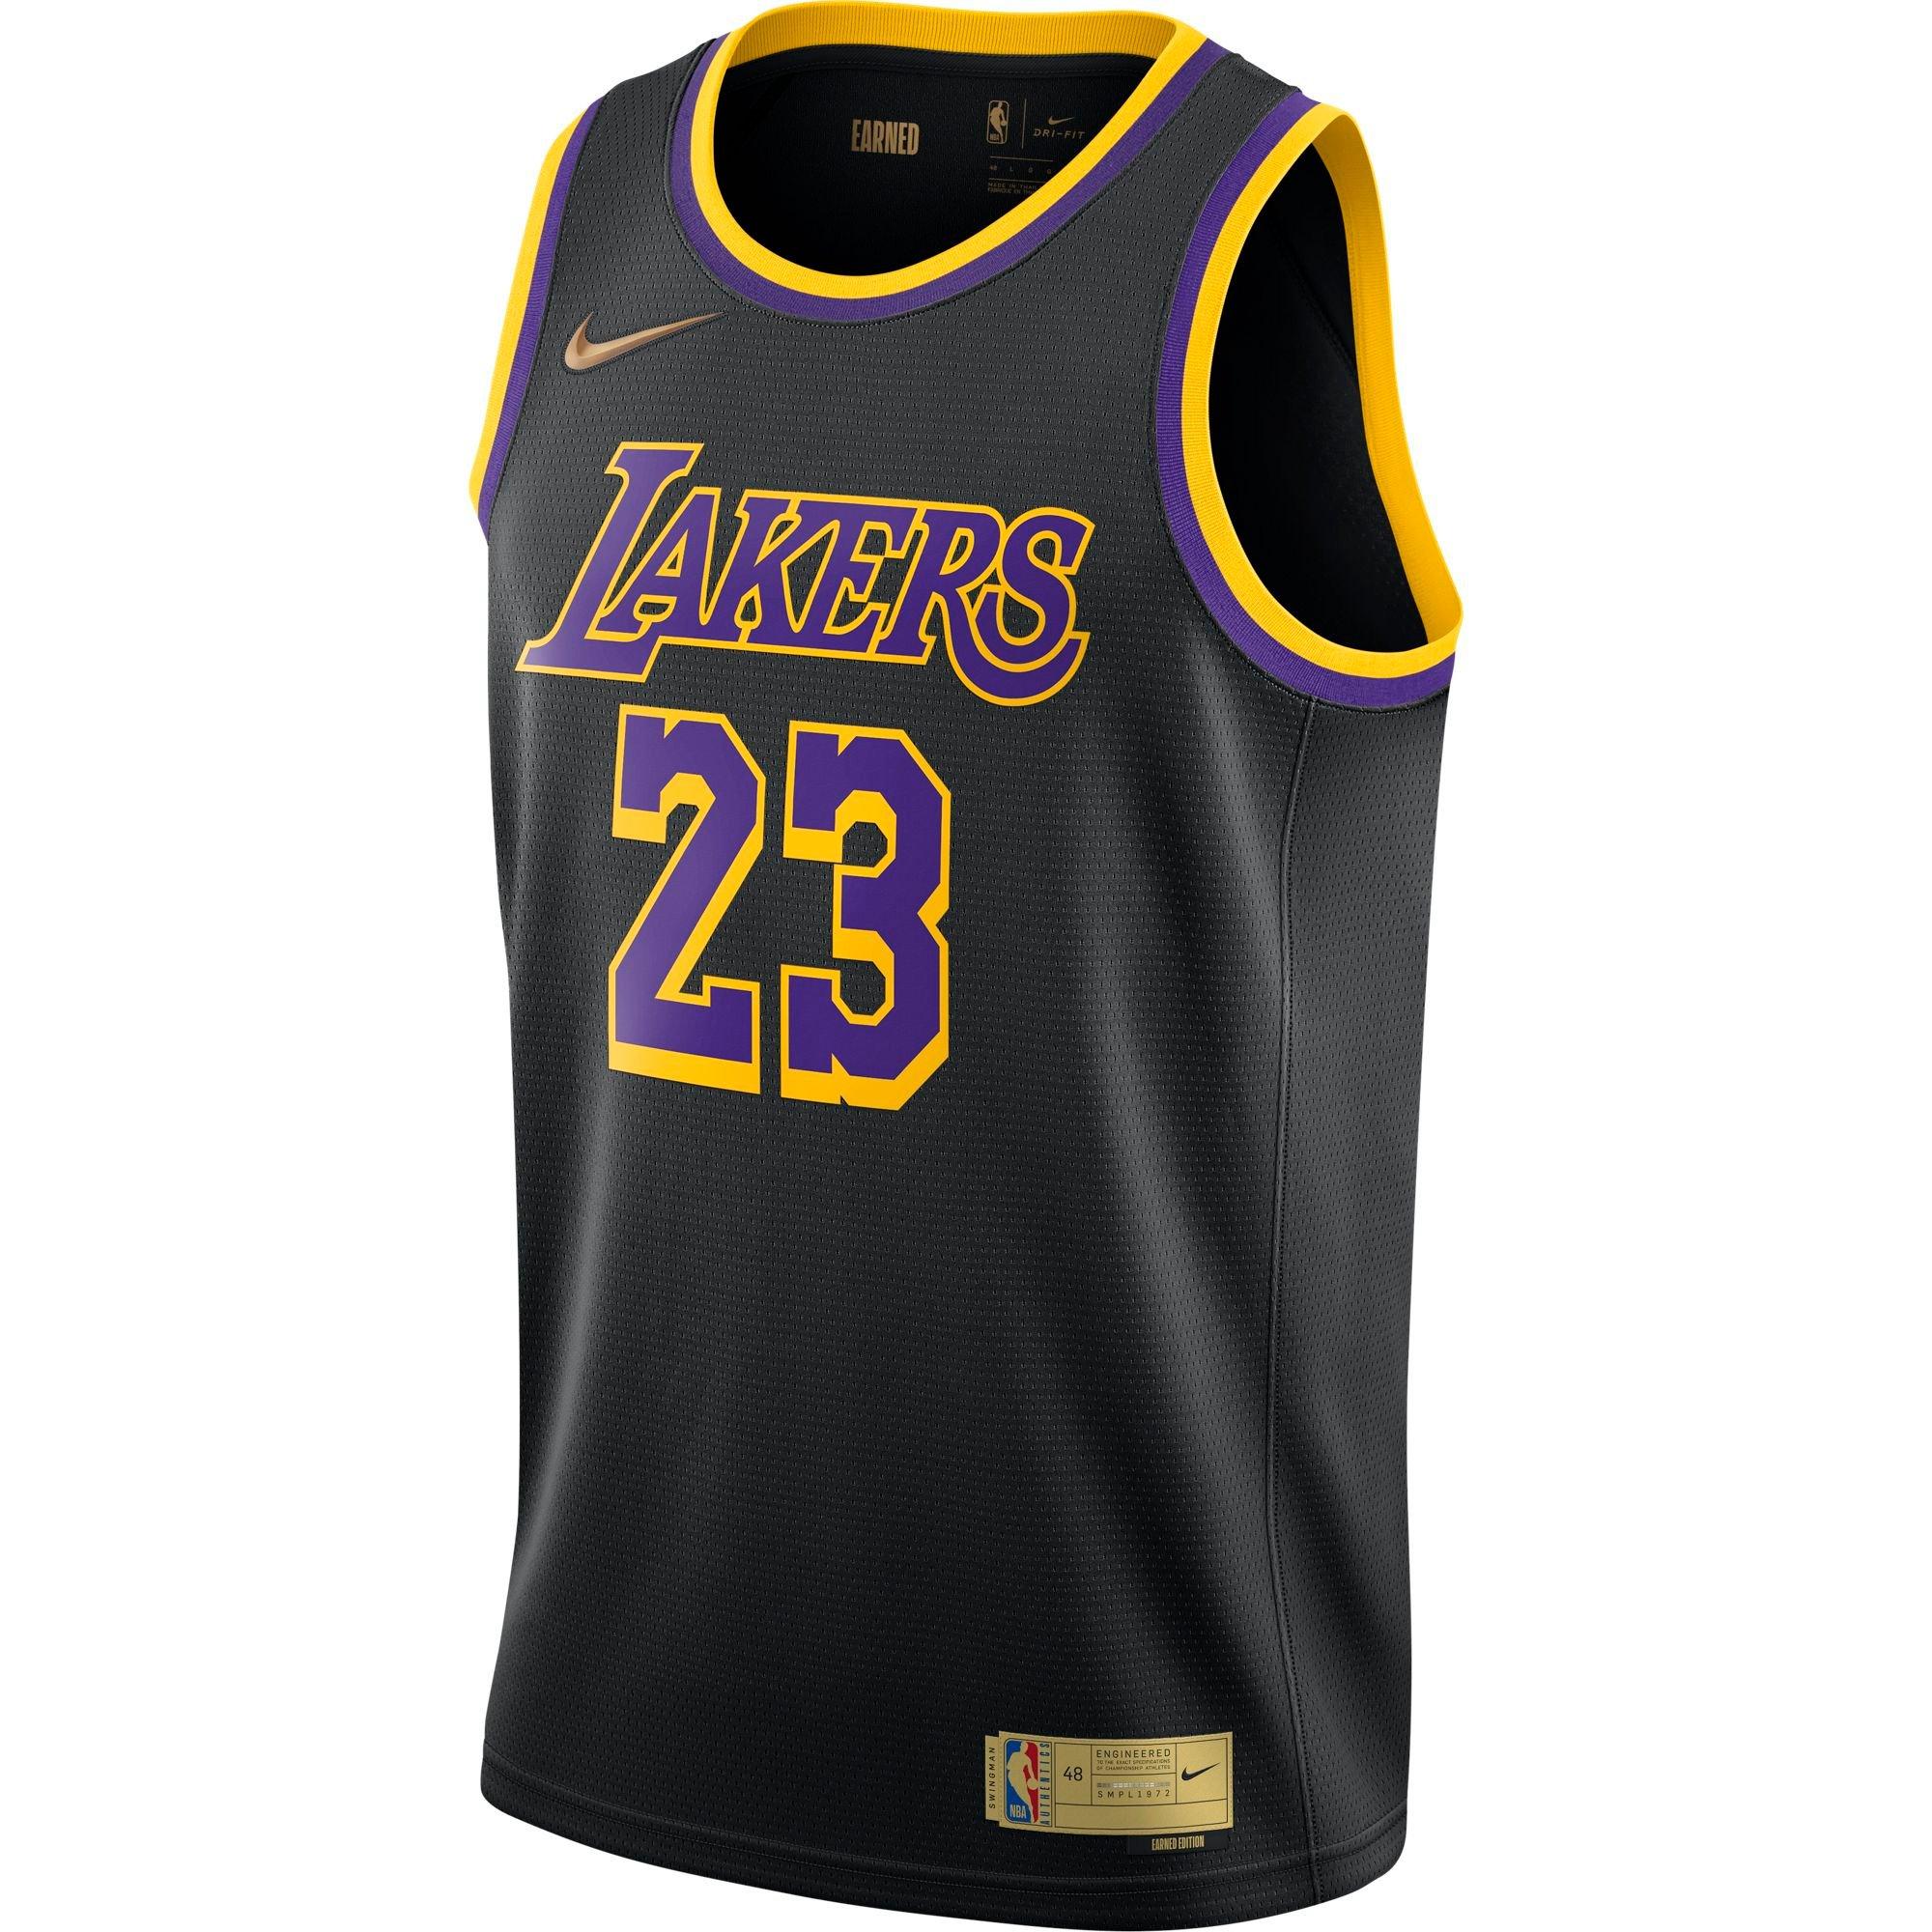 Nike Men's Los Angeles Lakers Lebron James Earned Edition Swingman